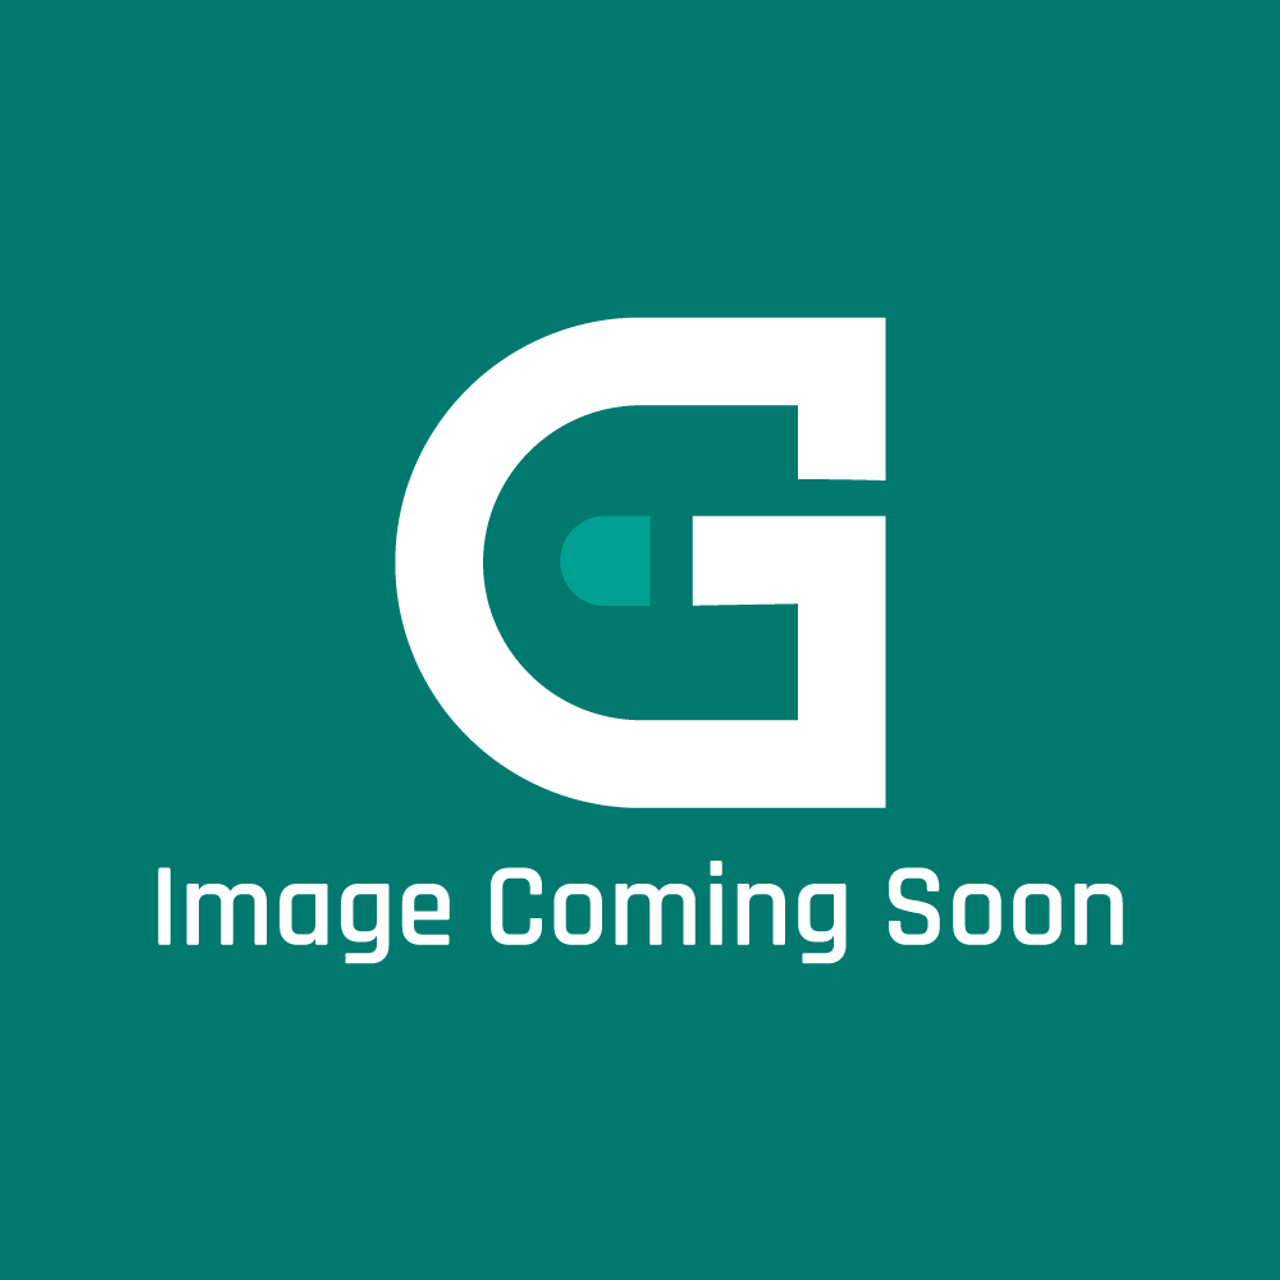 GE Appliances WX05X20641 - SERVICE KIT BELT TOOL - Image Coming Soon!